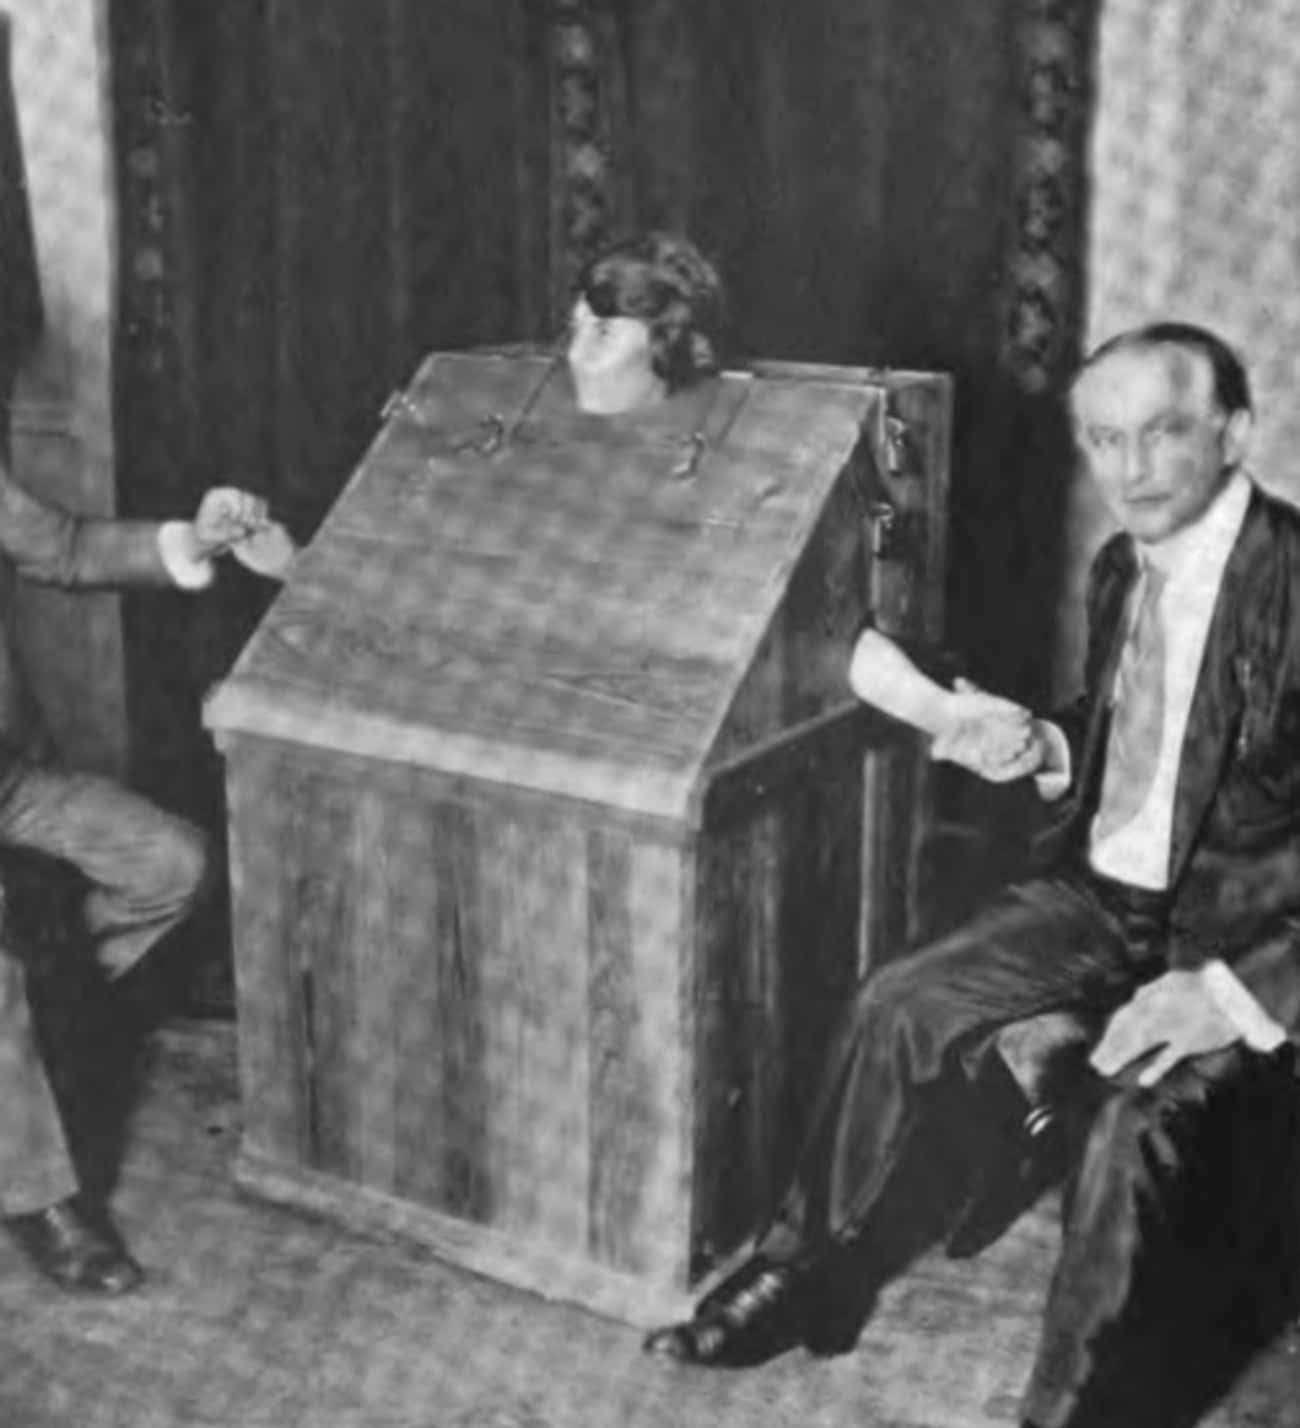 Houdini Used Unorthodox Methods To Eventually Expose Crandon’s Highly Sophisticated Tricks